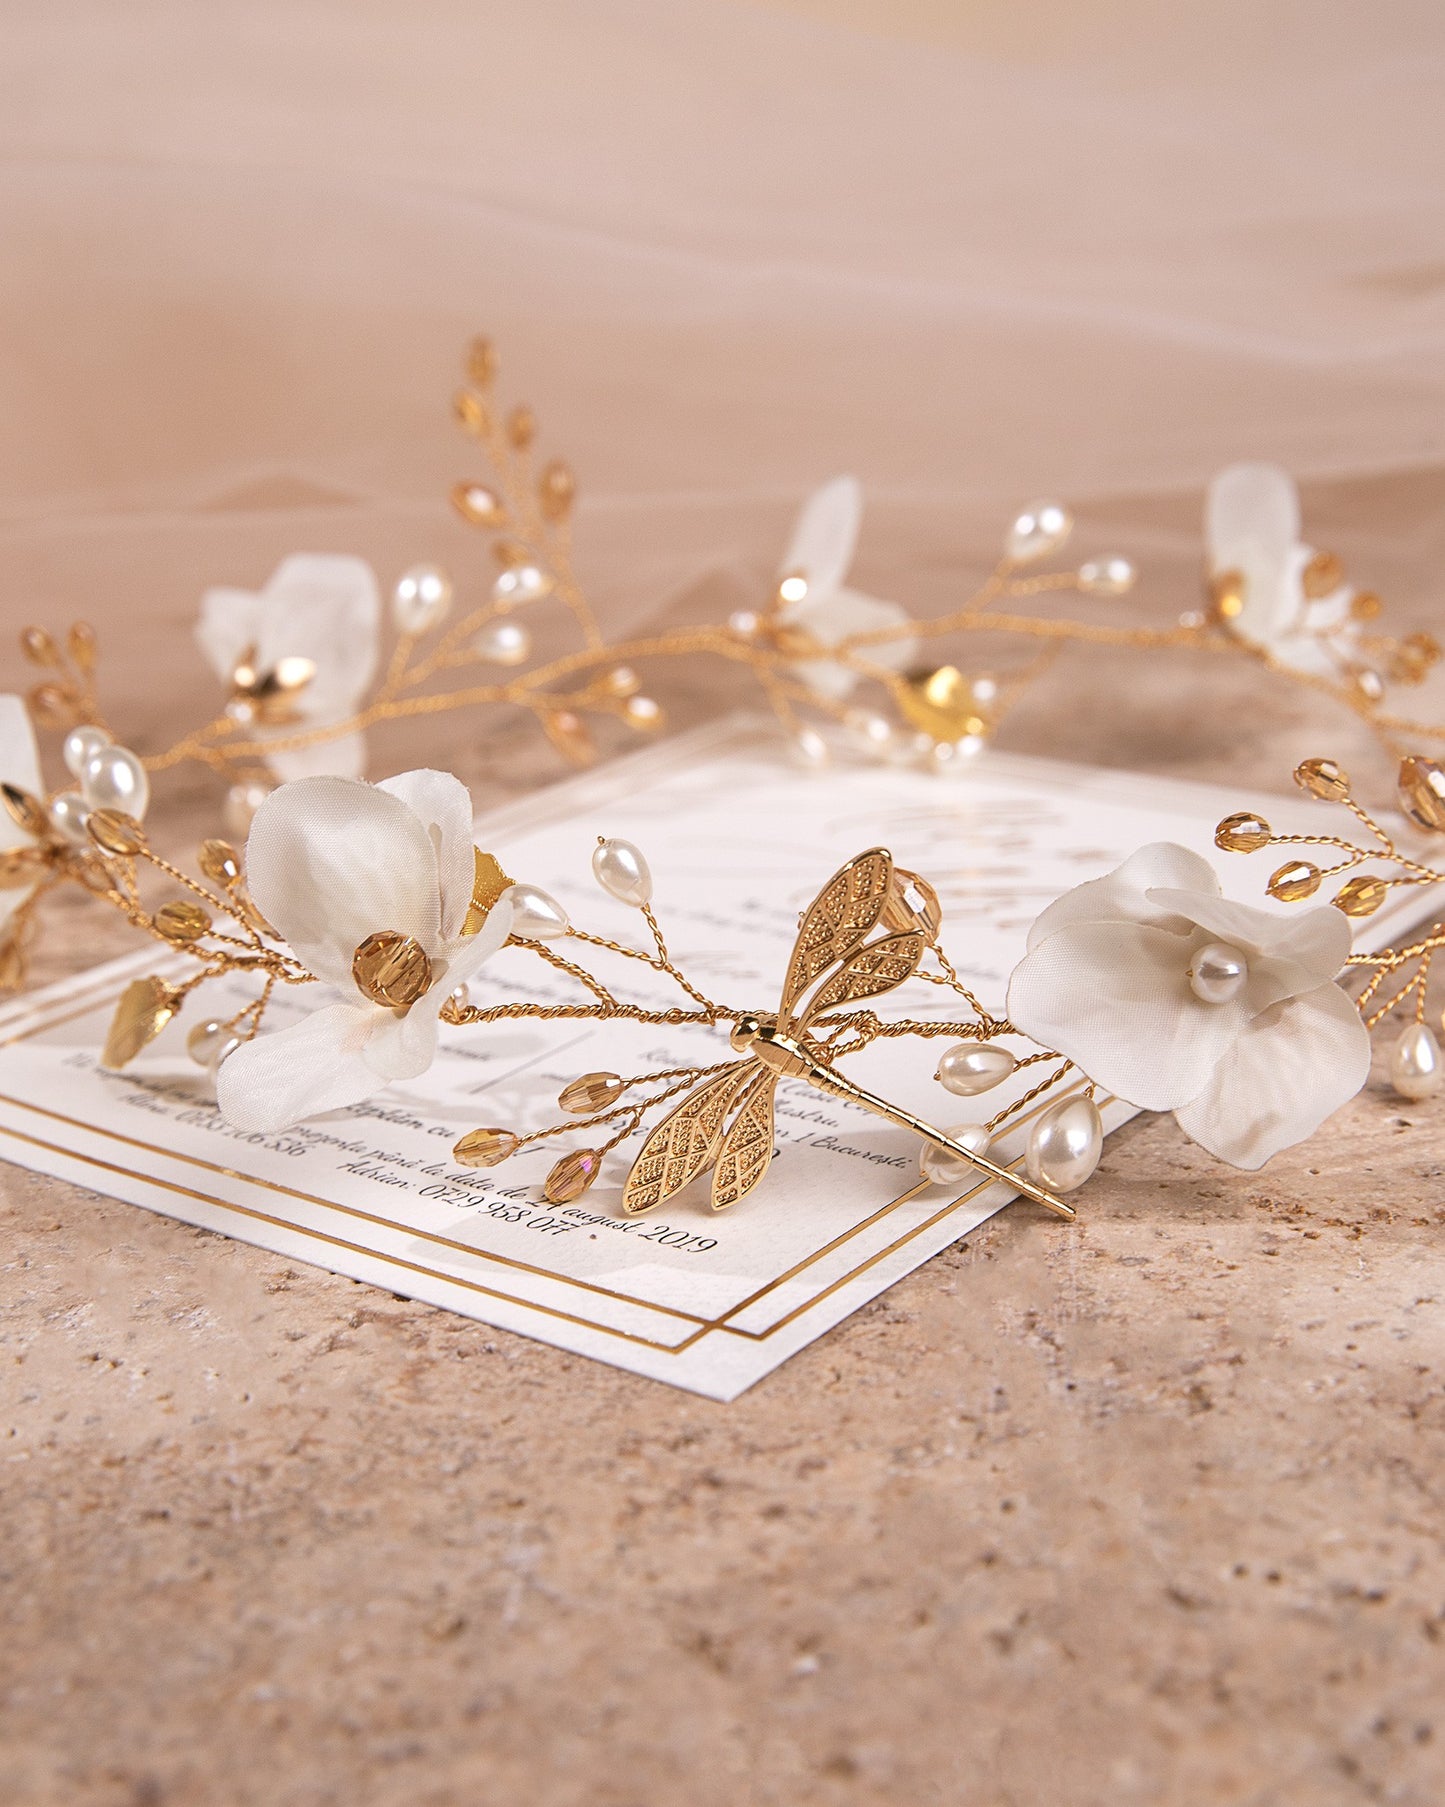 WHITE BEGONIA bridal hair vine || Bridal hair accessory - Engagement hair piece - Wedding hair jewelry - Bridal crown - White flower hair vine